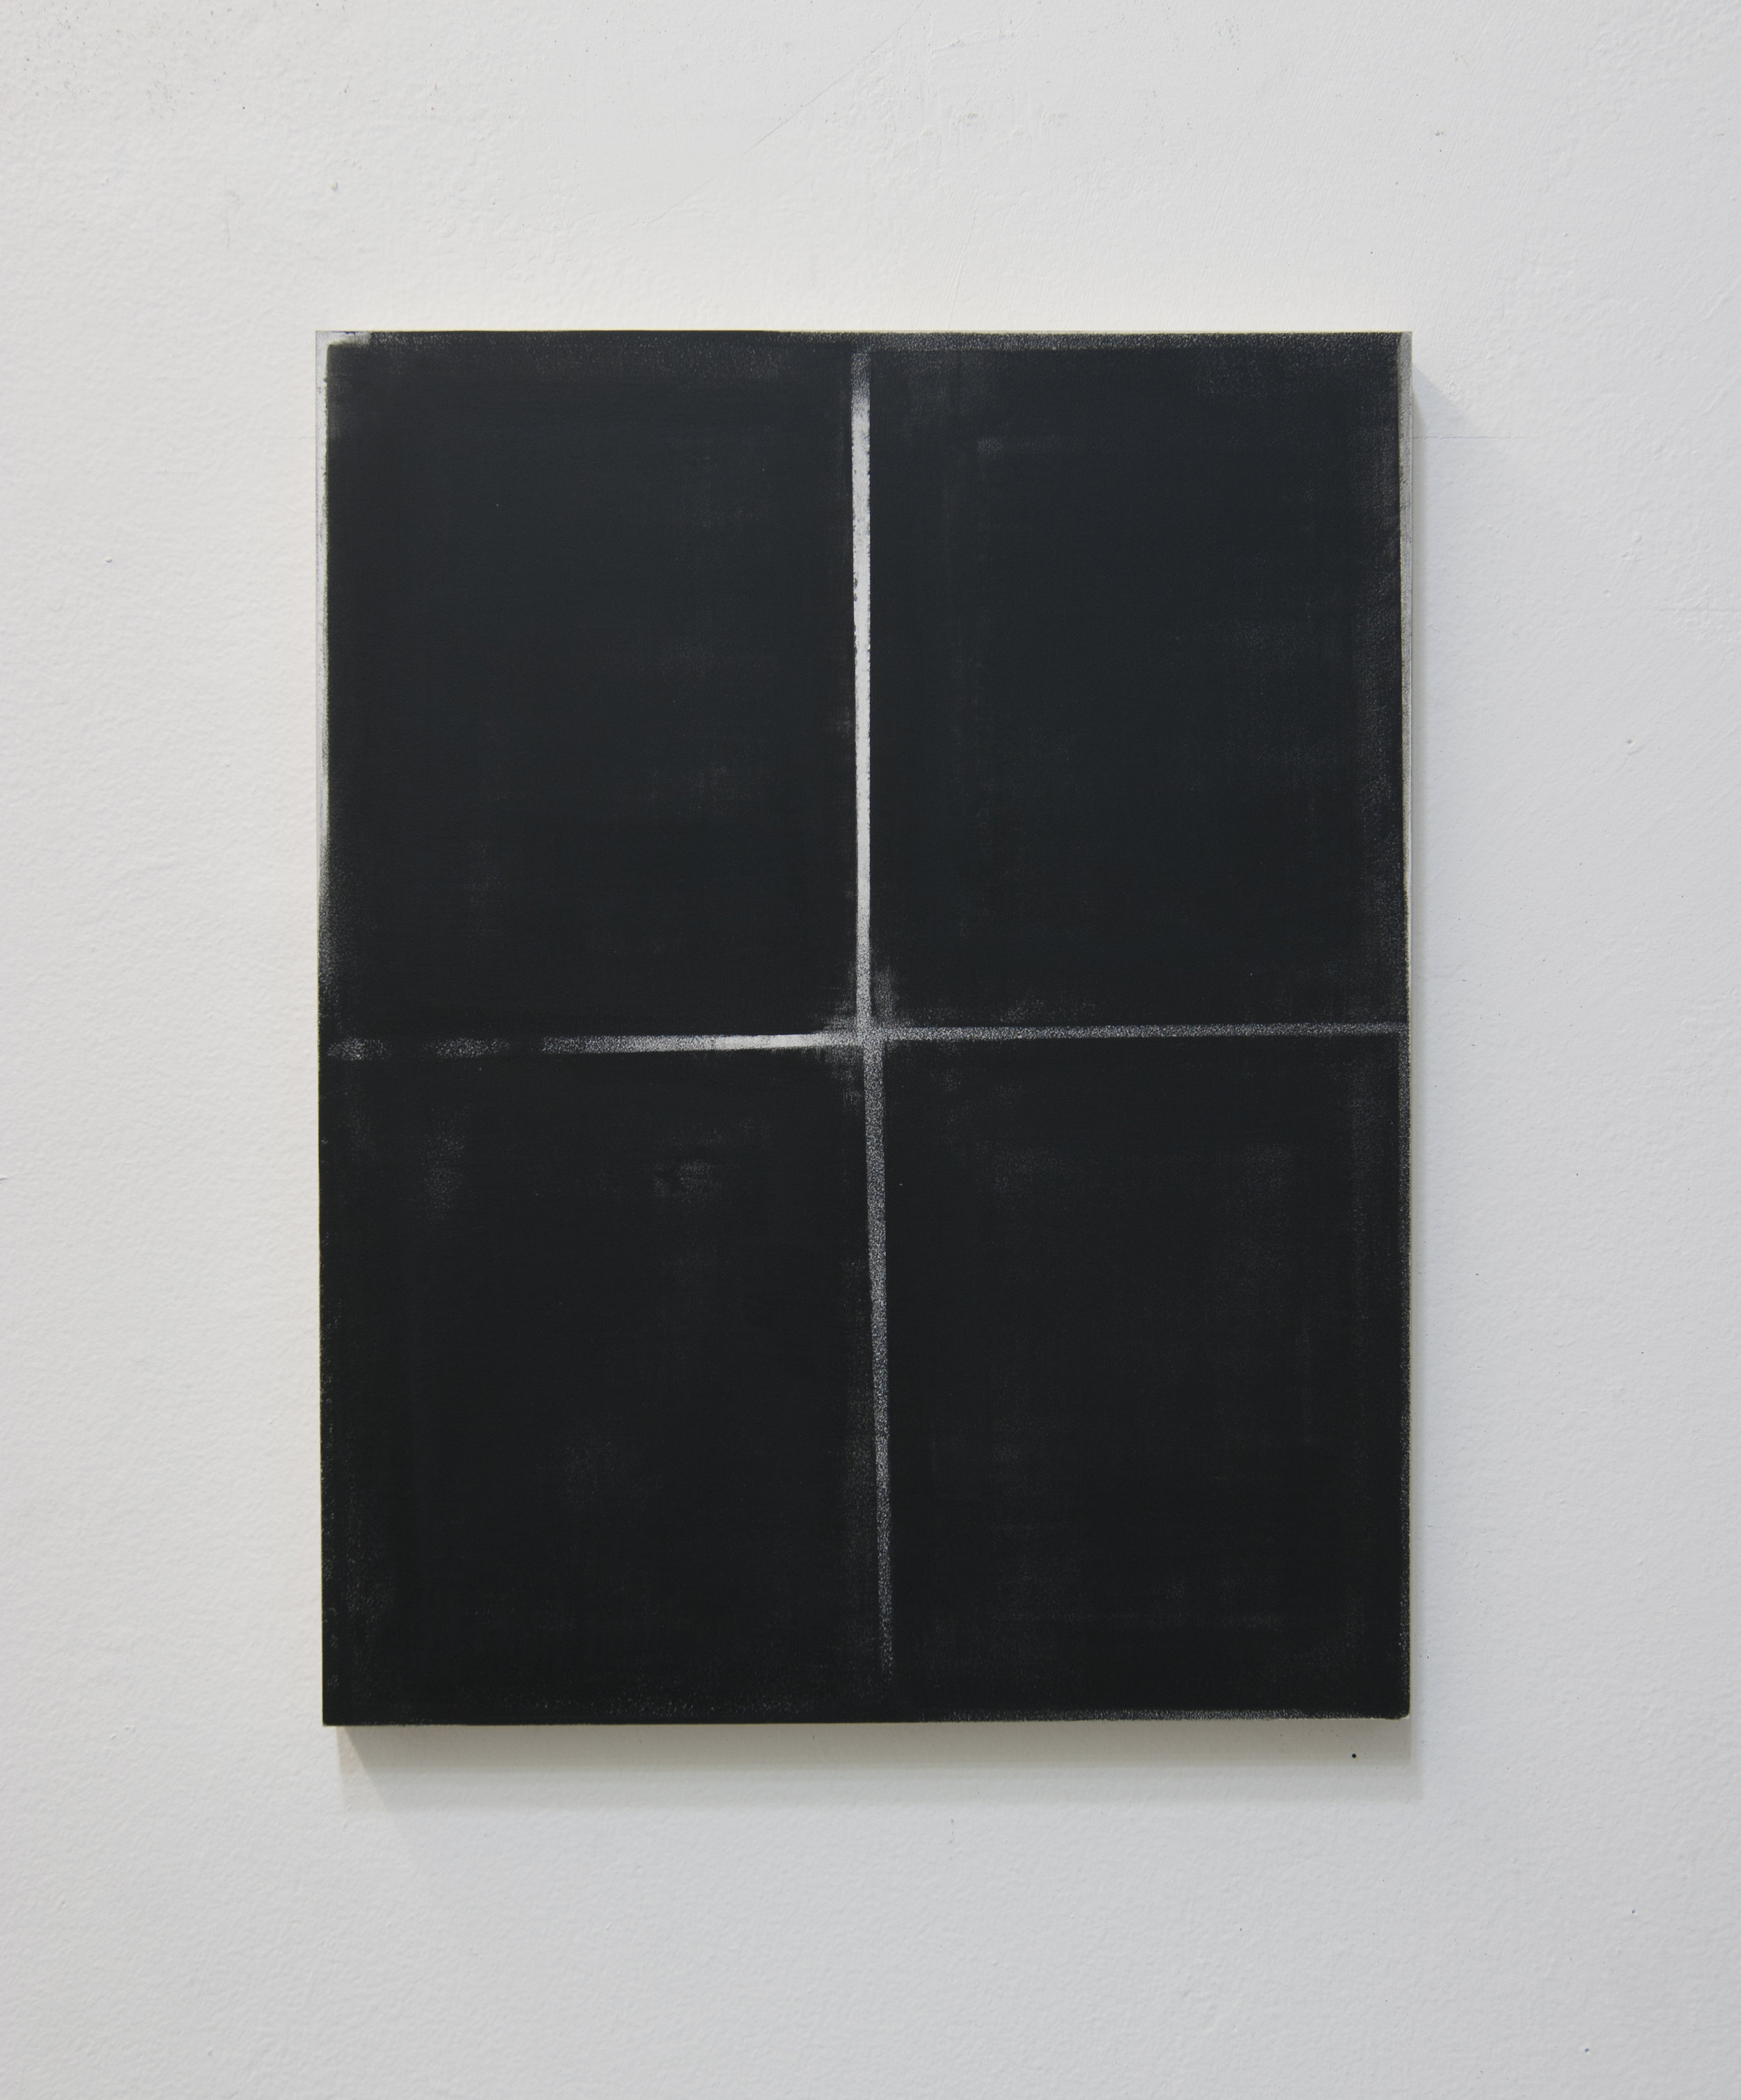  Untitled (Quadrants), 2012  Acrylic on panel, 14 x 11 inches 